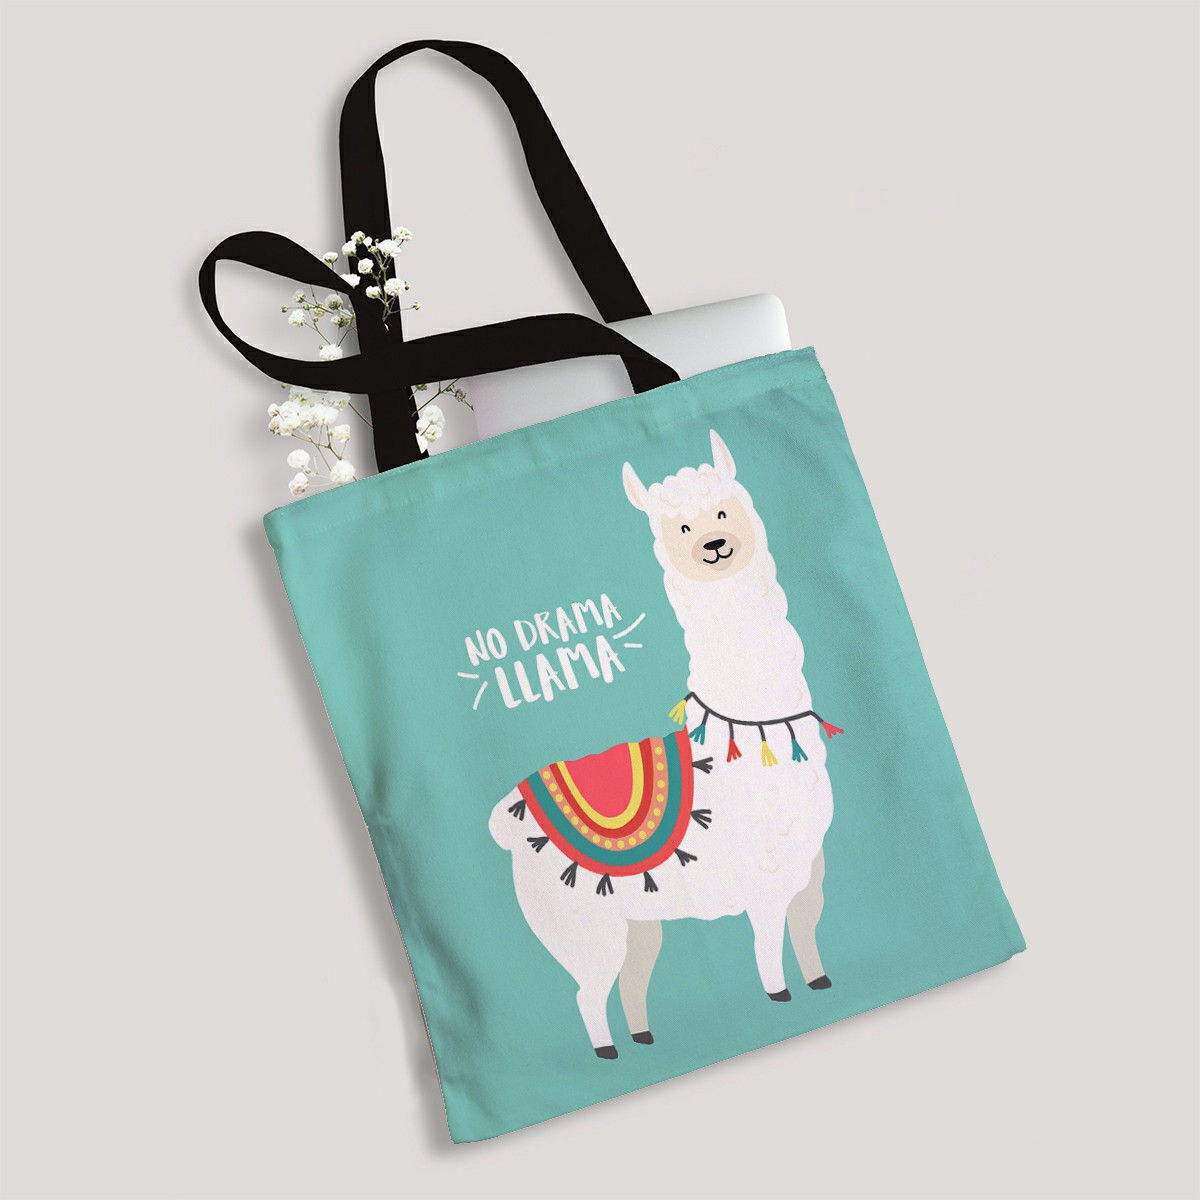 ECZJNT Cute Cartoon Llama Design Canvas Bag Reusable Tote Grocery Shopping Bags Tote Bag 14"(W) x 16"(H) - image 2 of 2